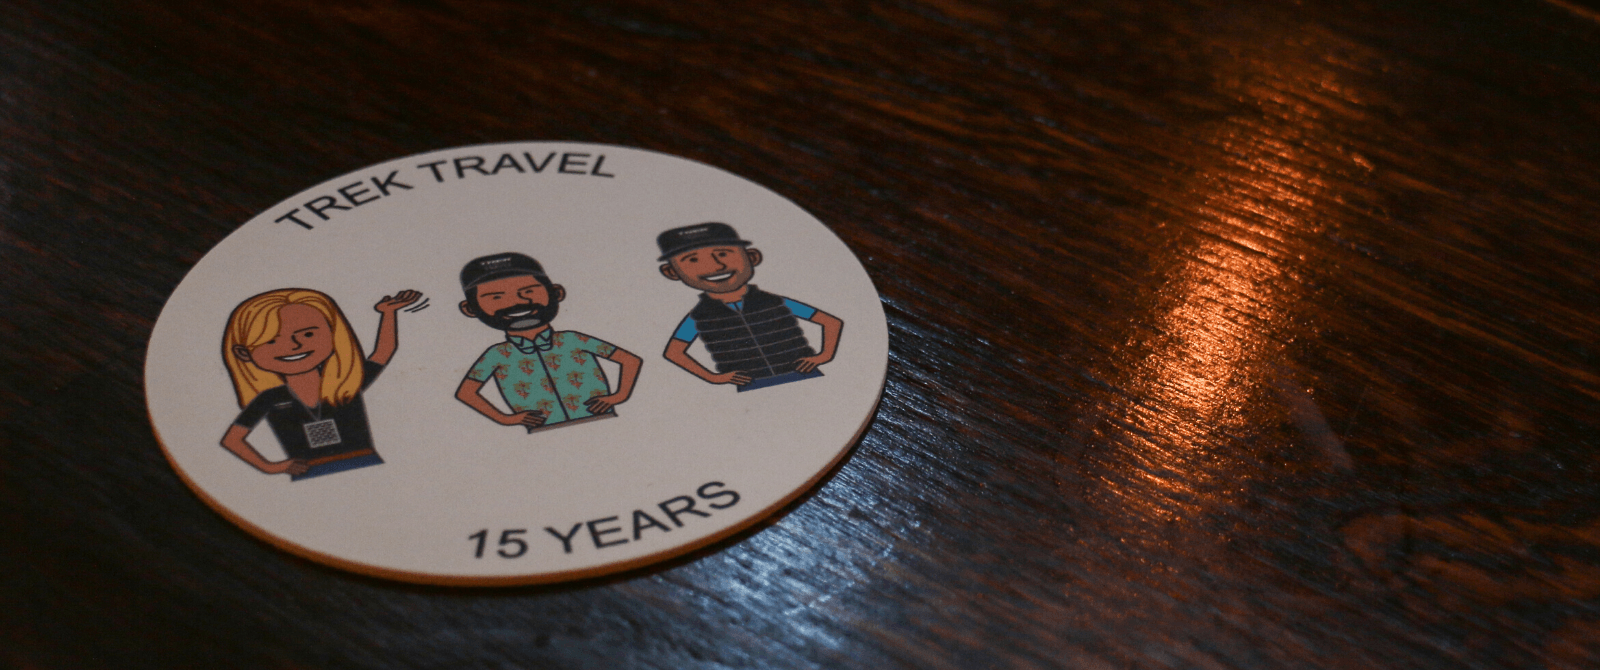 Pin on 15 year anniversary trip